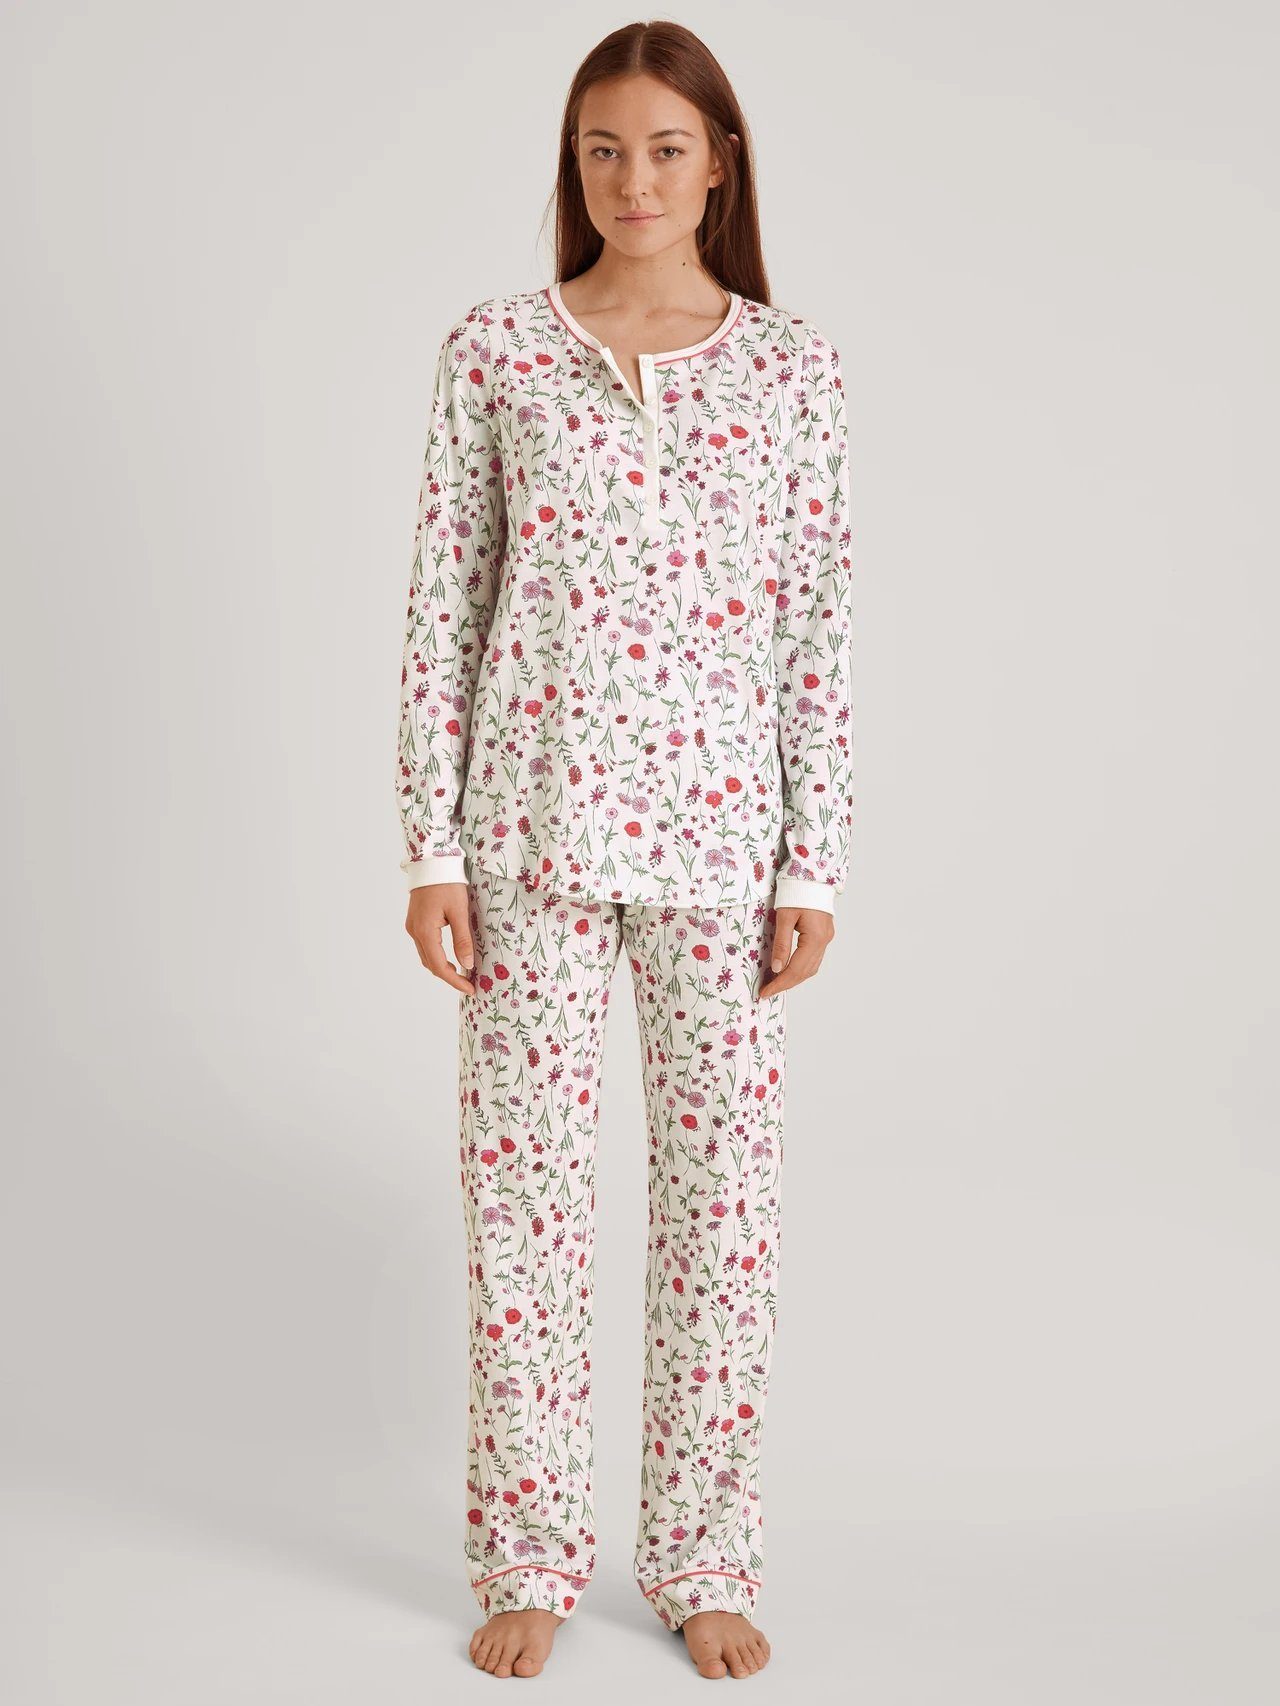 Calida 40336 Damen Stück, 1 CALIDA 1 Pyjama tlg., (1 Pyjama porcelain Stück) rose